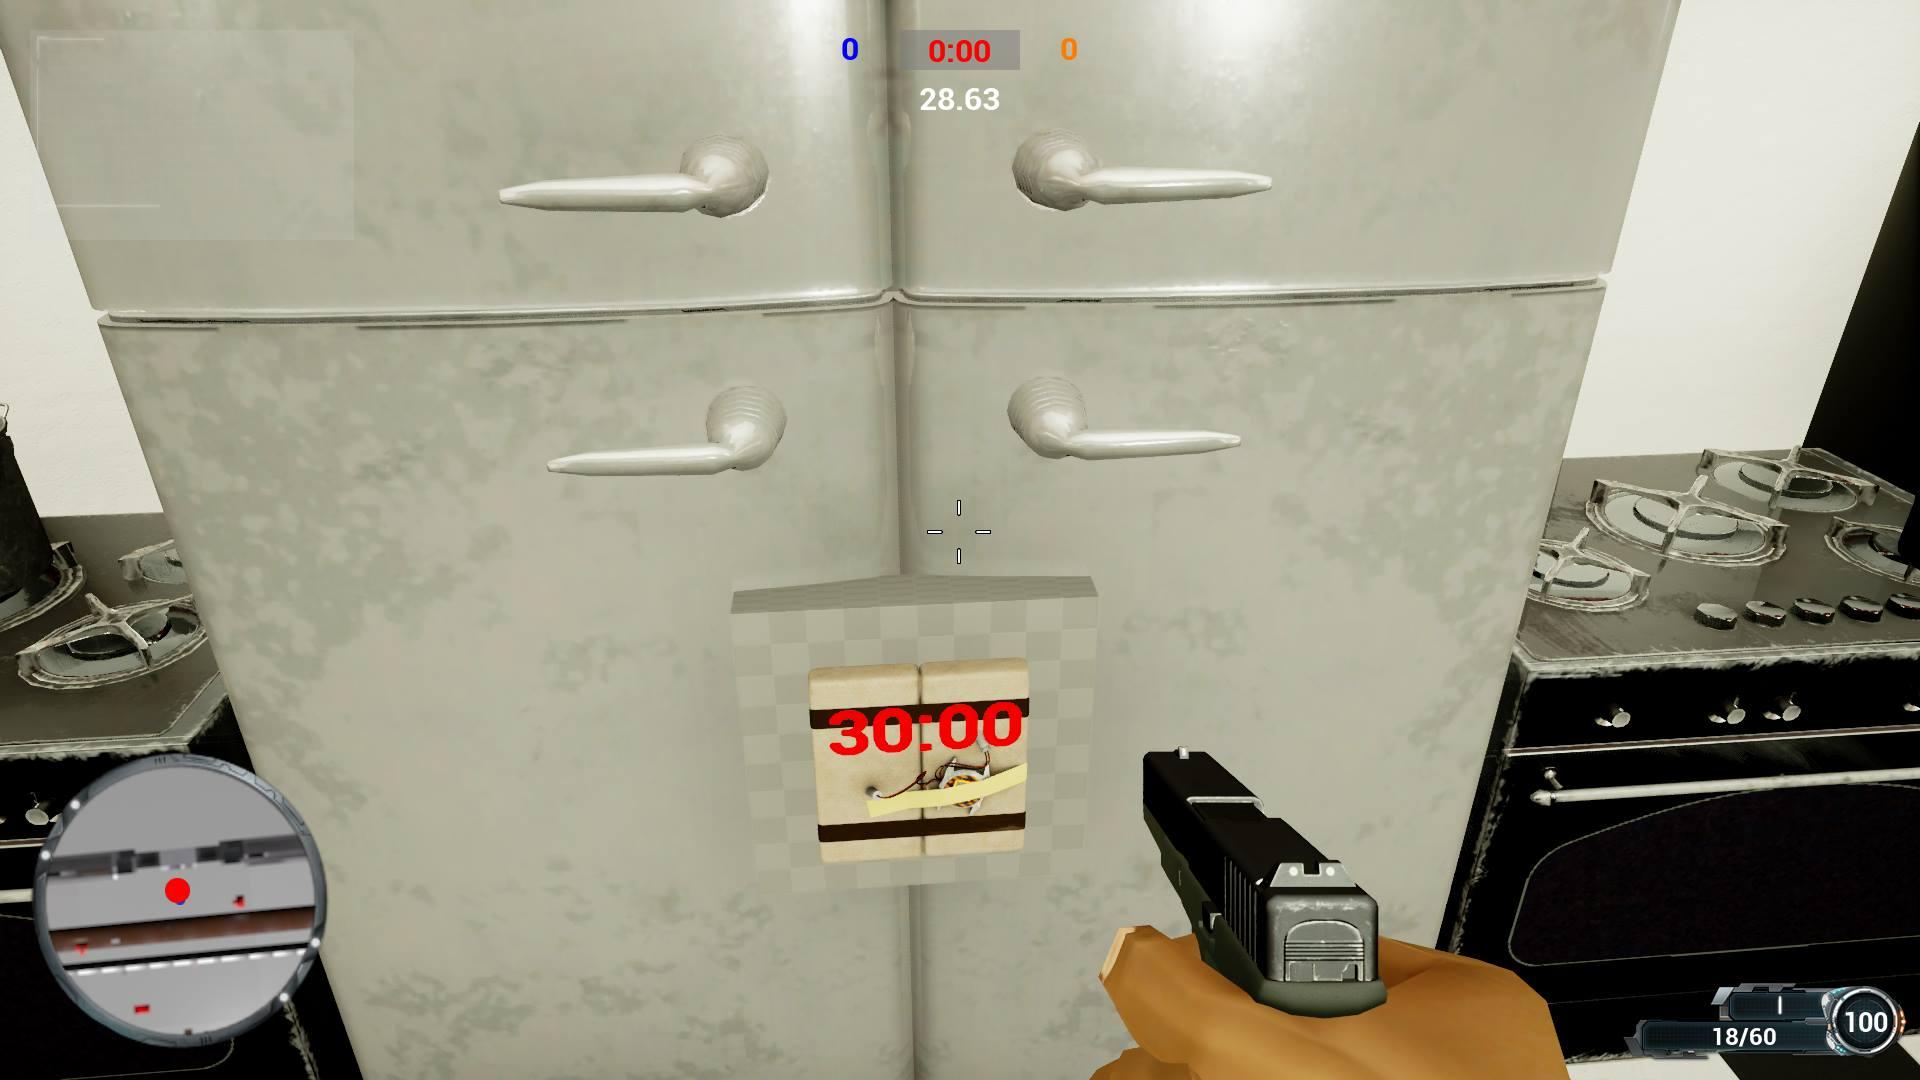 Screenshot №8 from game Shot Shot Tactic